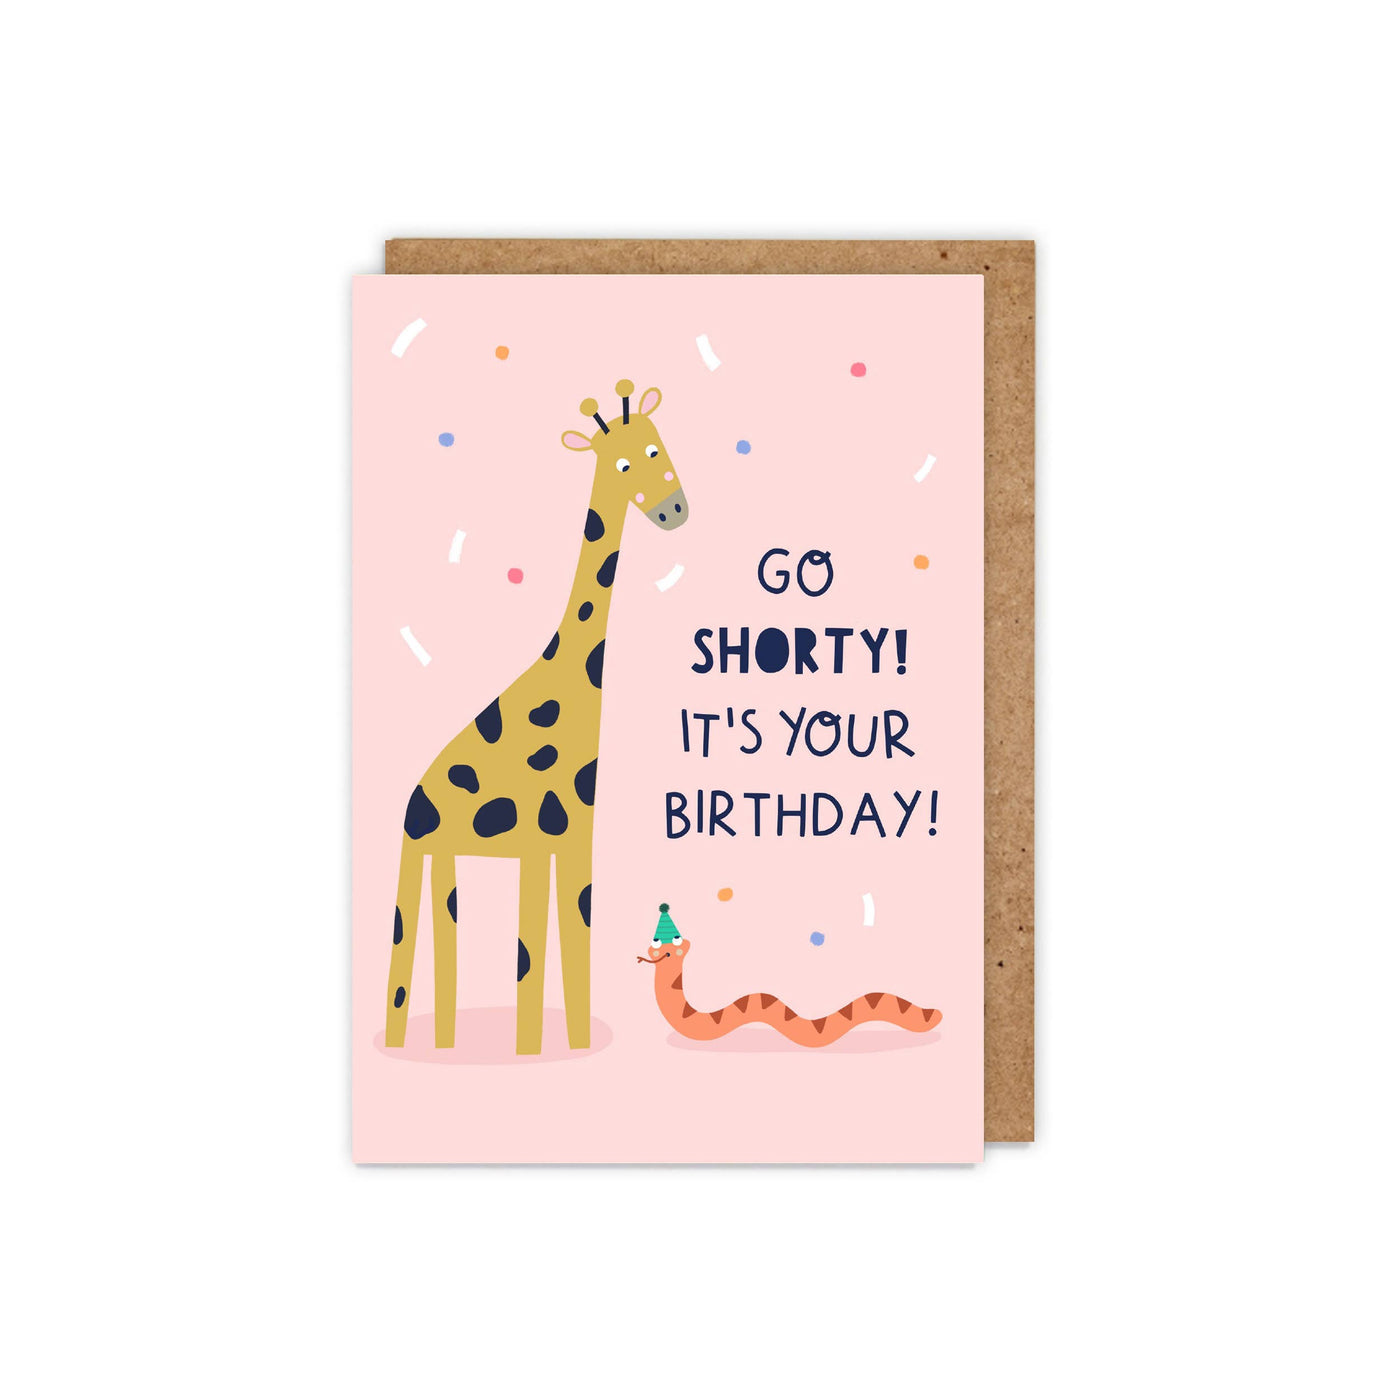 Go shorty! It's your birthday! Birthday Card